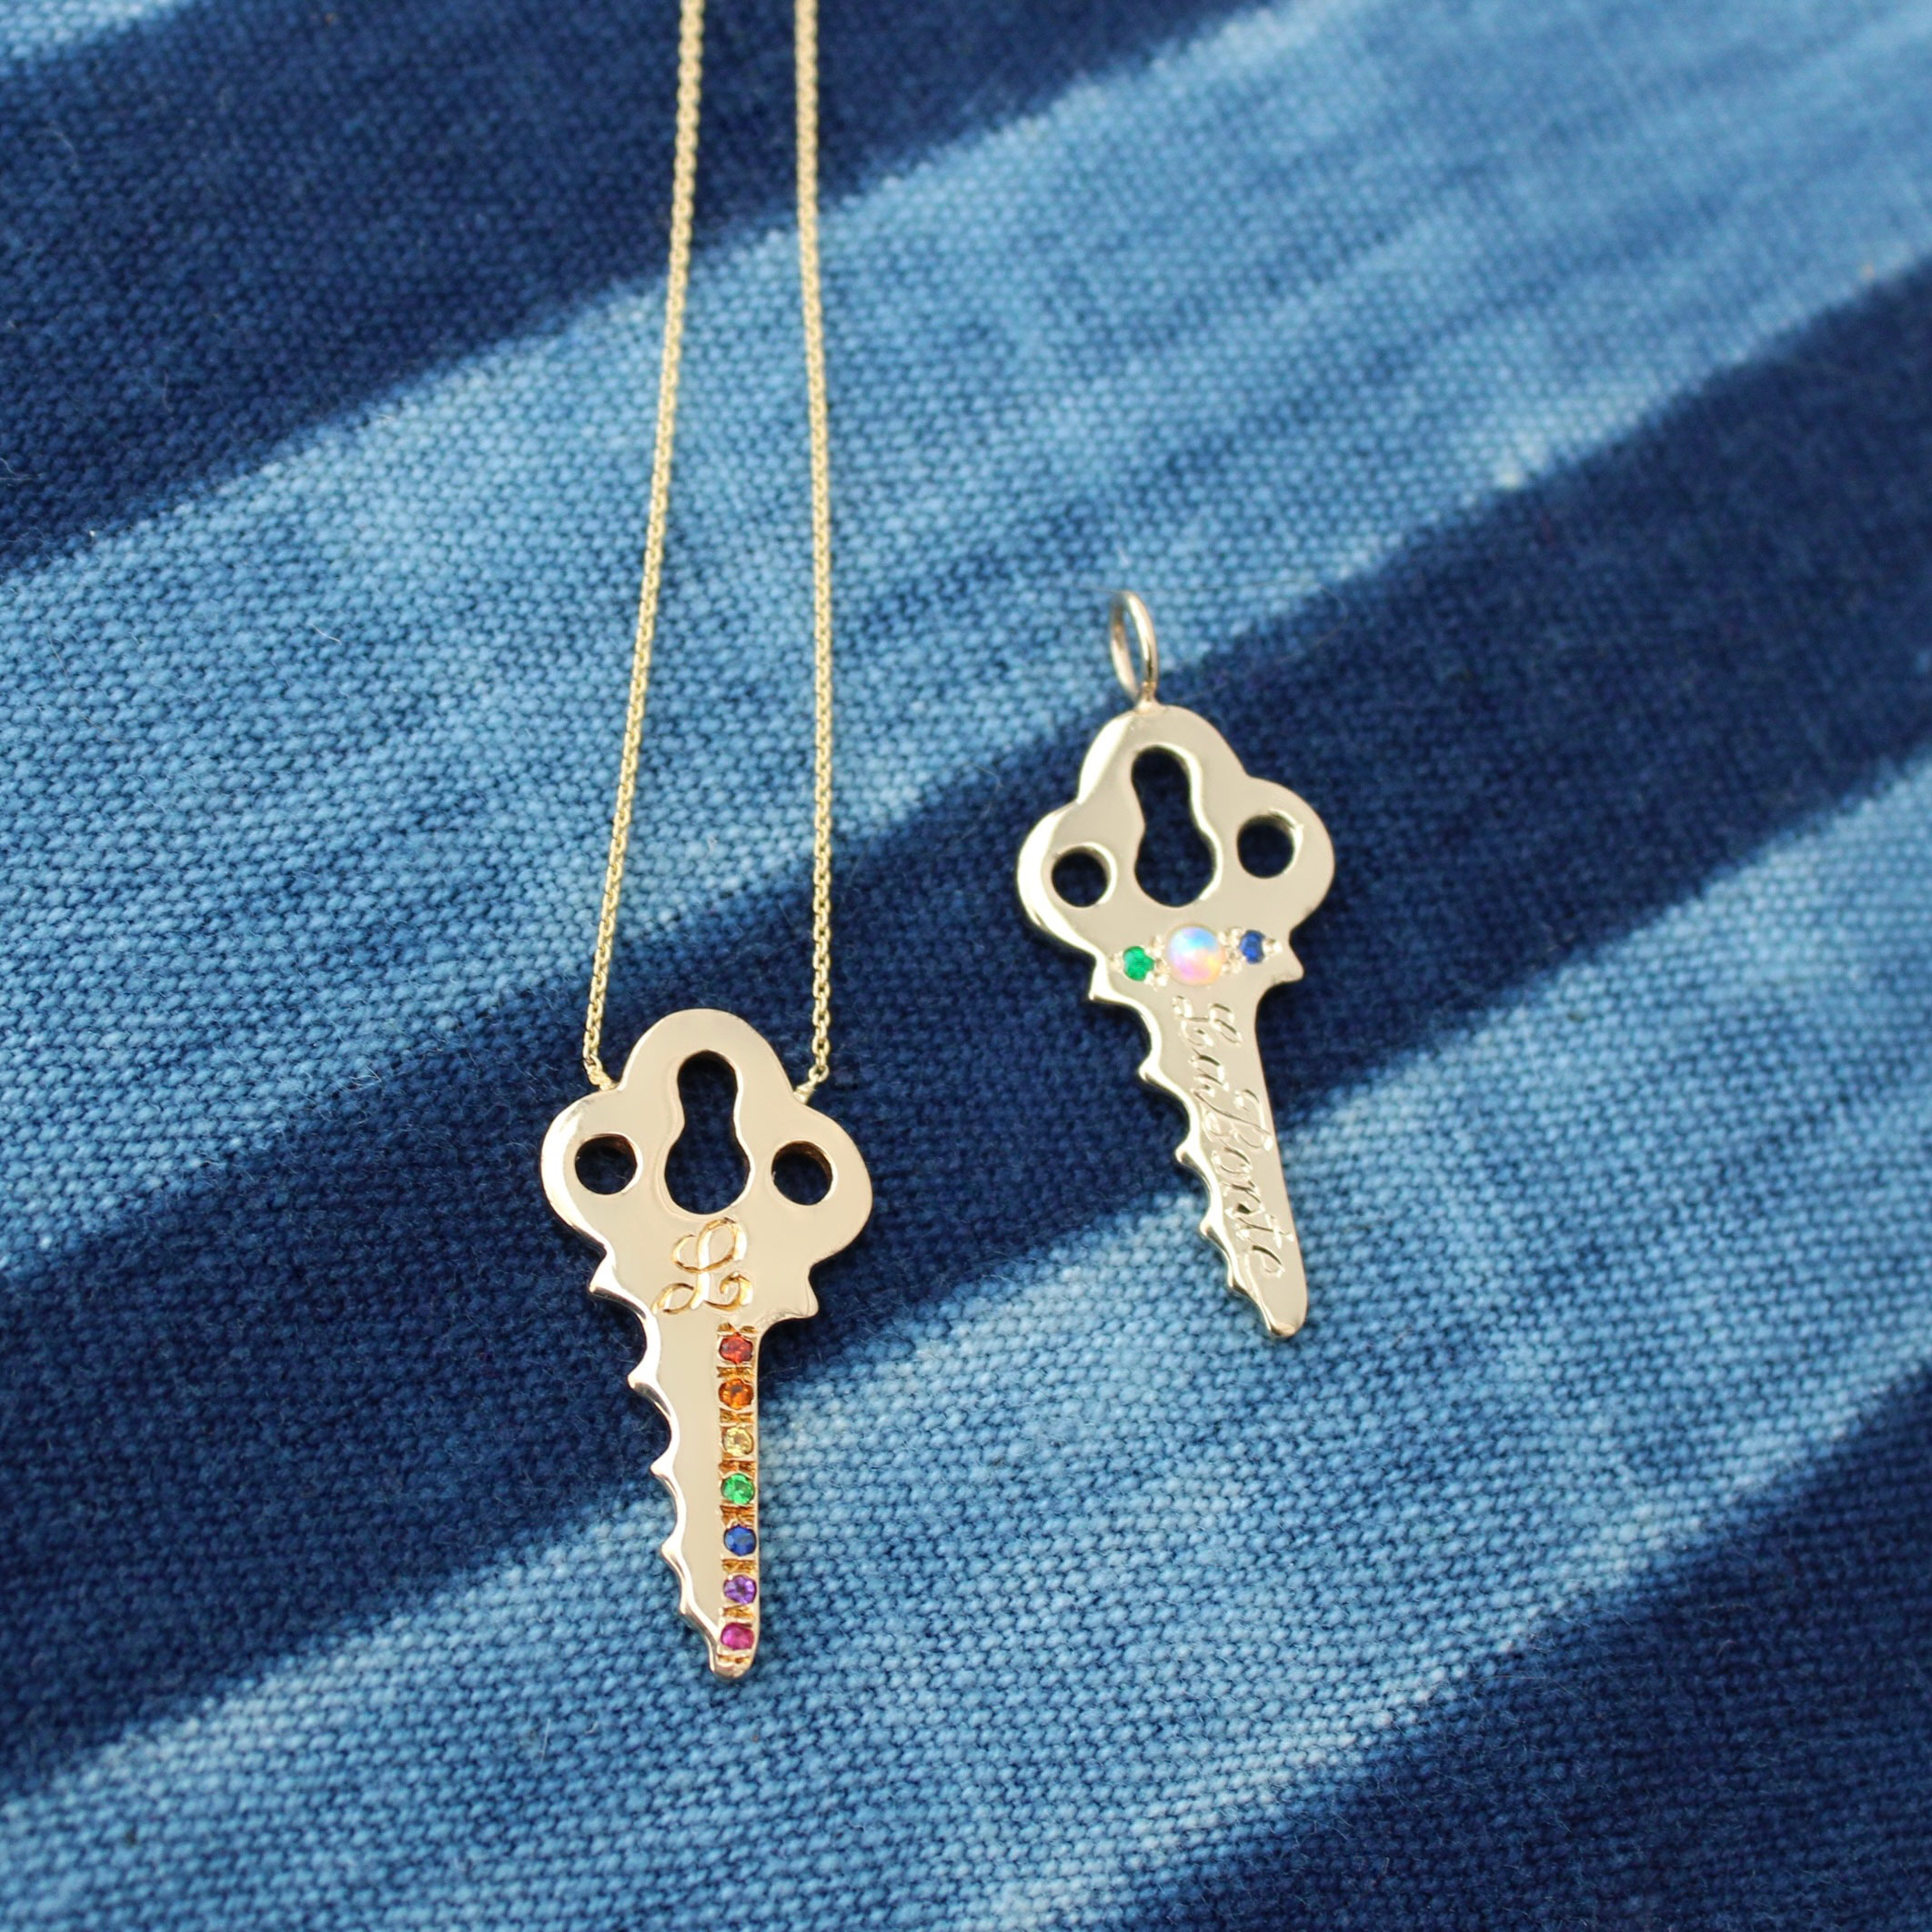 personalized key necklaces gemstones engraved